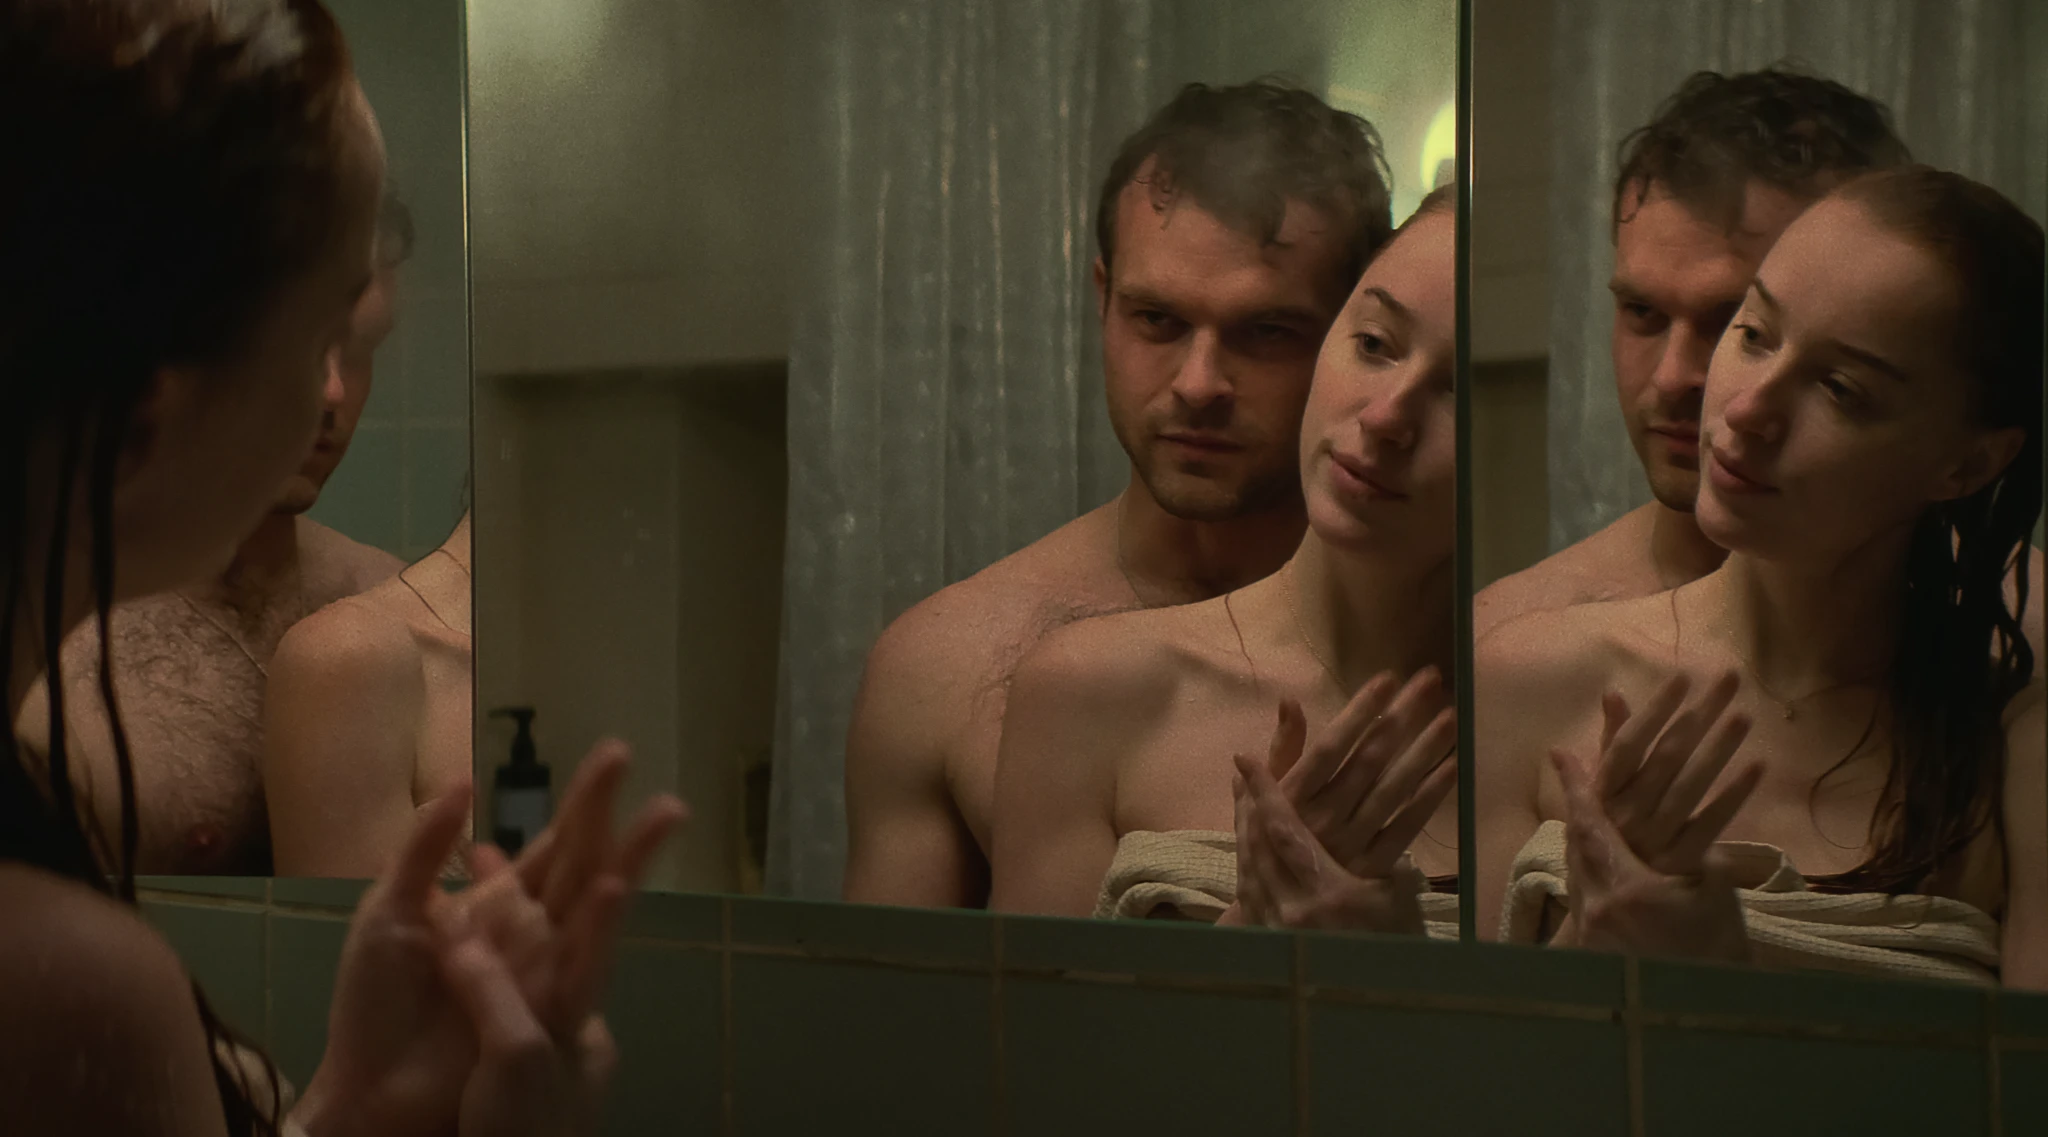 'Fair Play' Trailer: Phoebe Dynevor and Alden Ehrenreich's 'Twisted Erotic Thriller for Grown-ups'